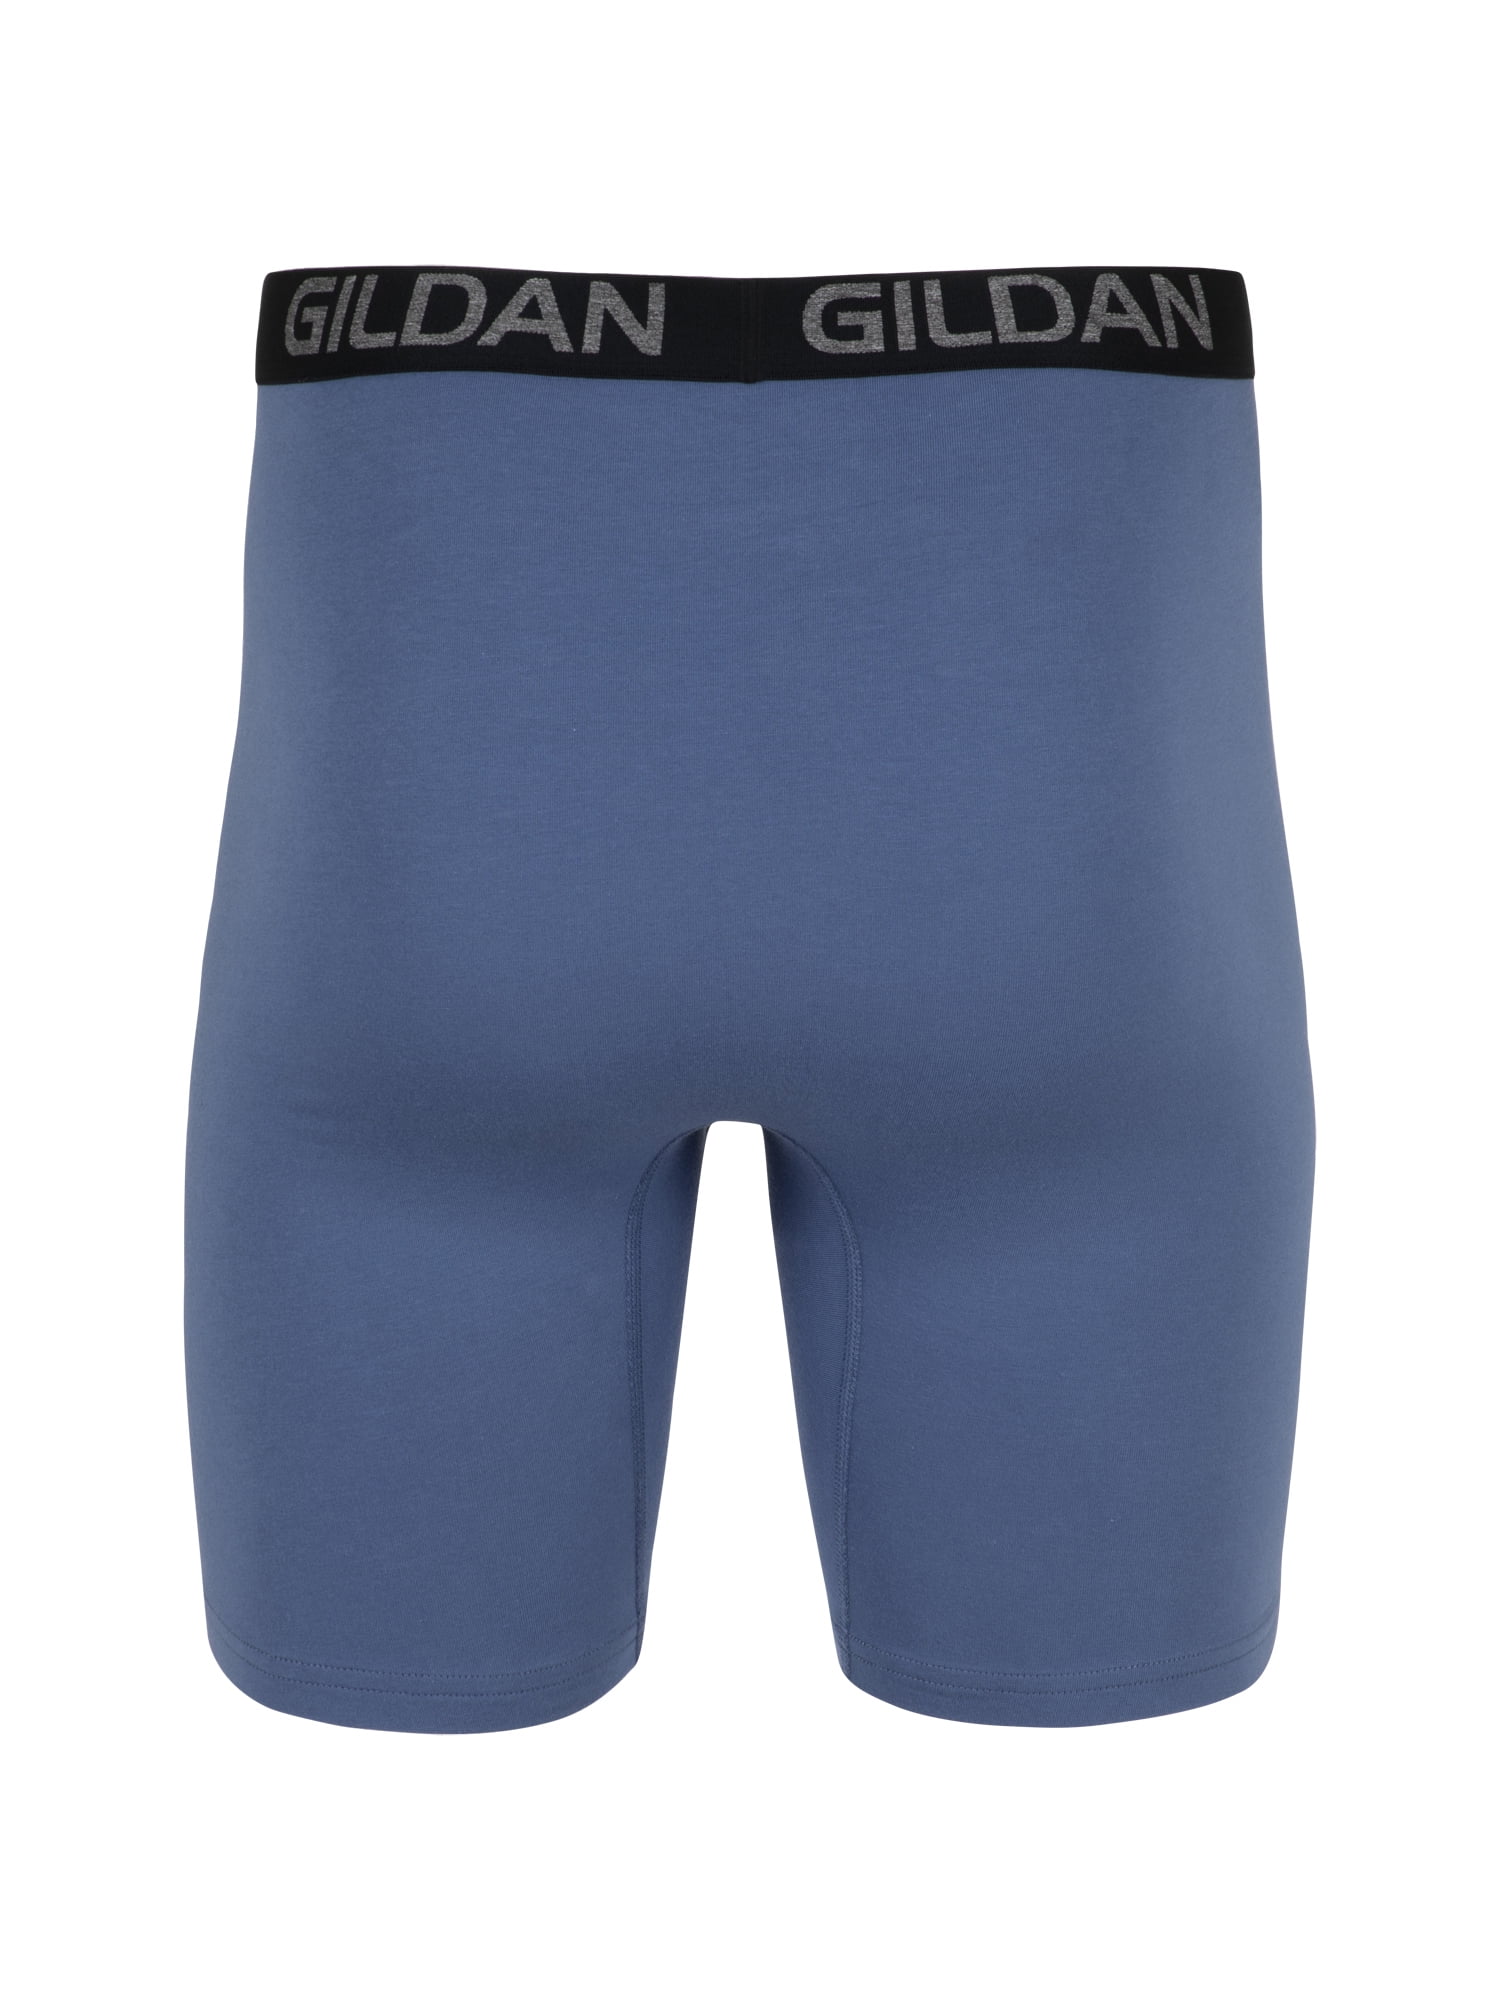 Gildan Men's Medium Indigo Blue 100% Cotton Boxer Briefs (1 Pair